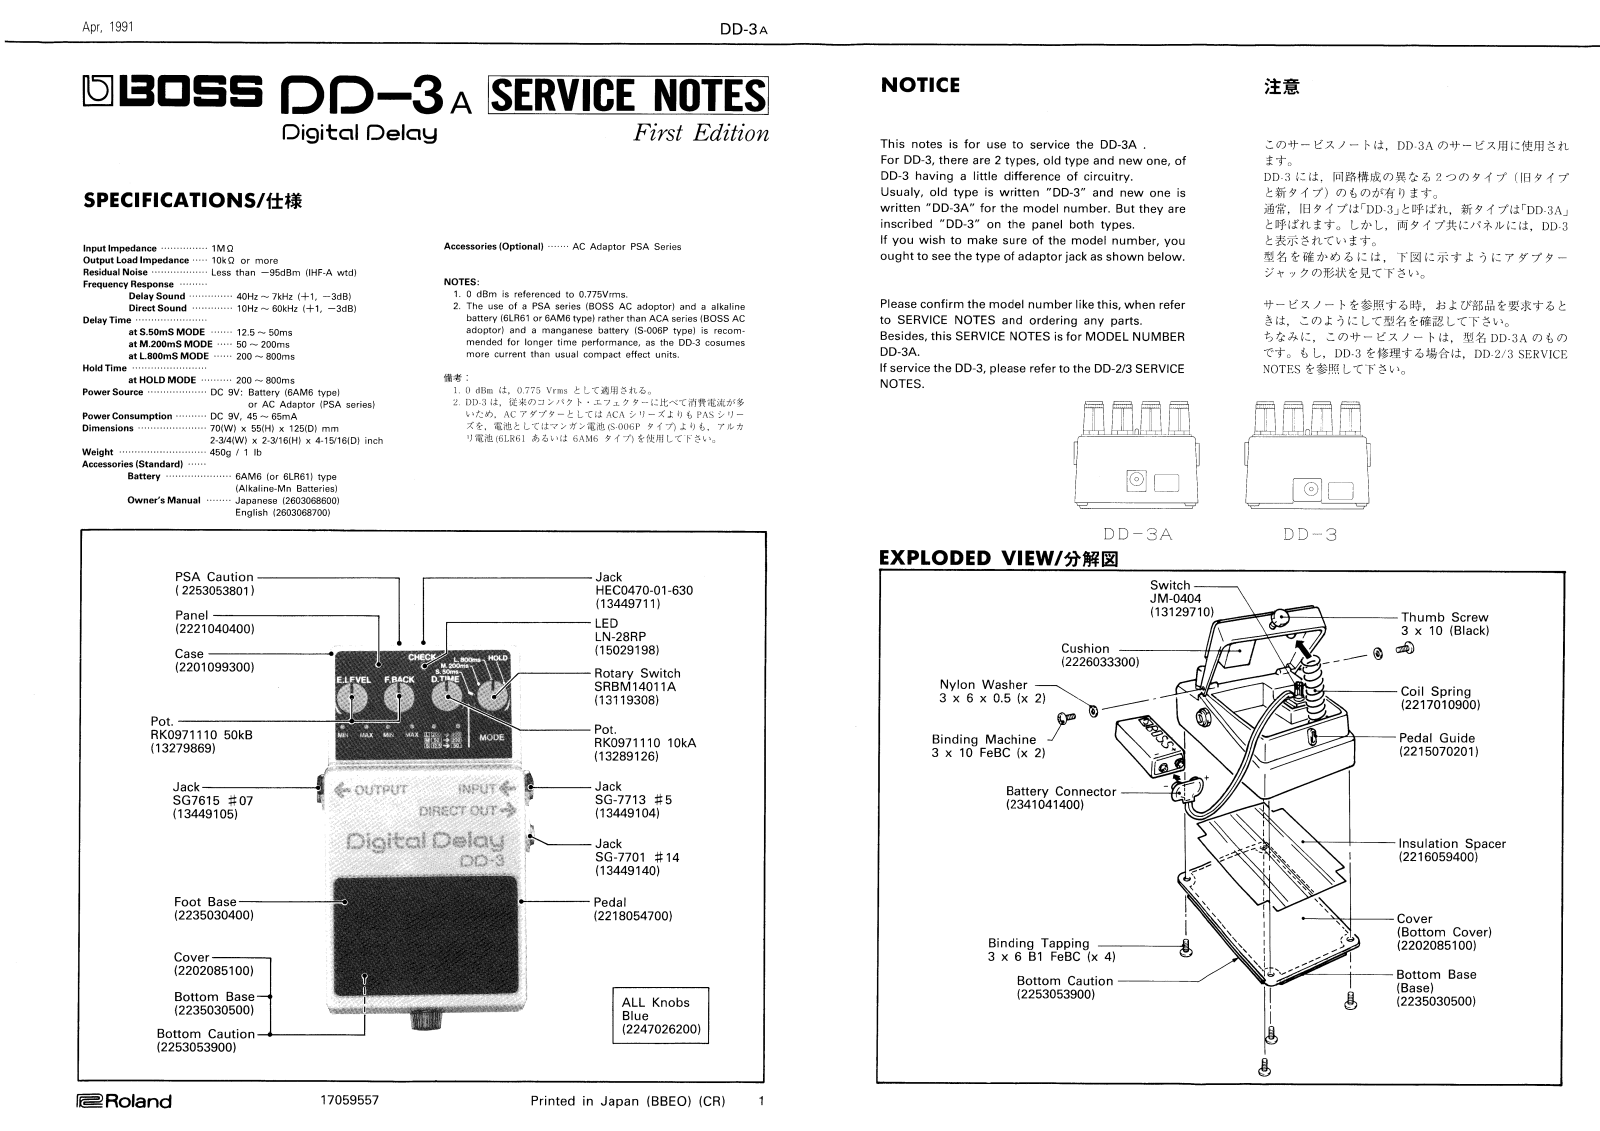 BOSS DD-3A Service Manual